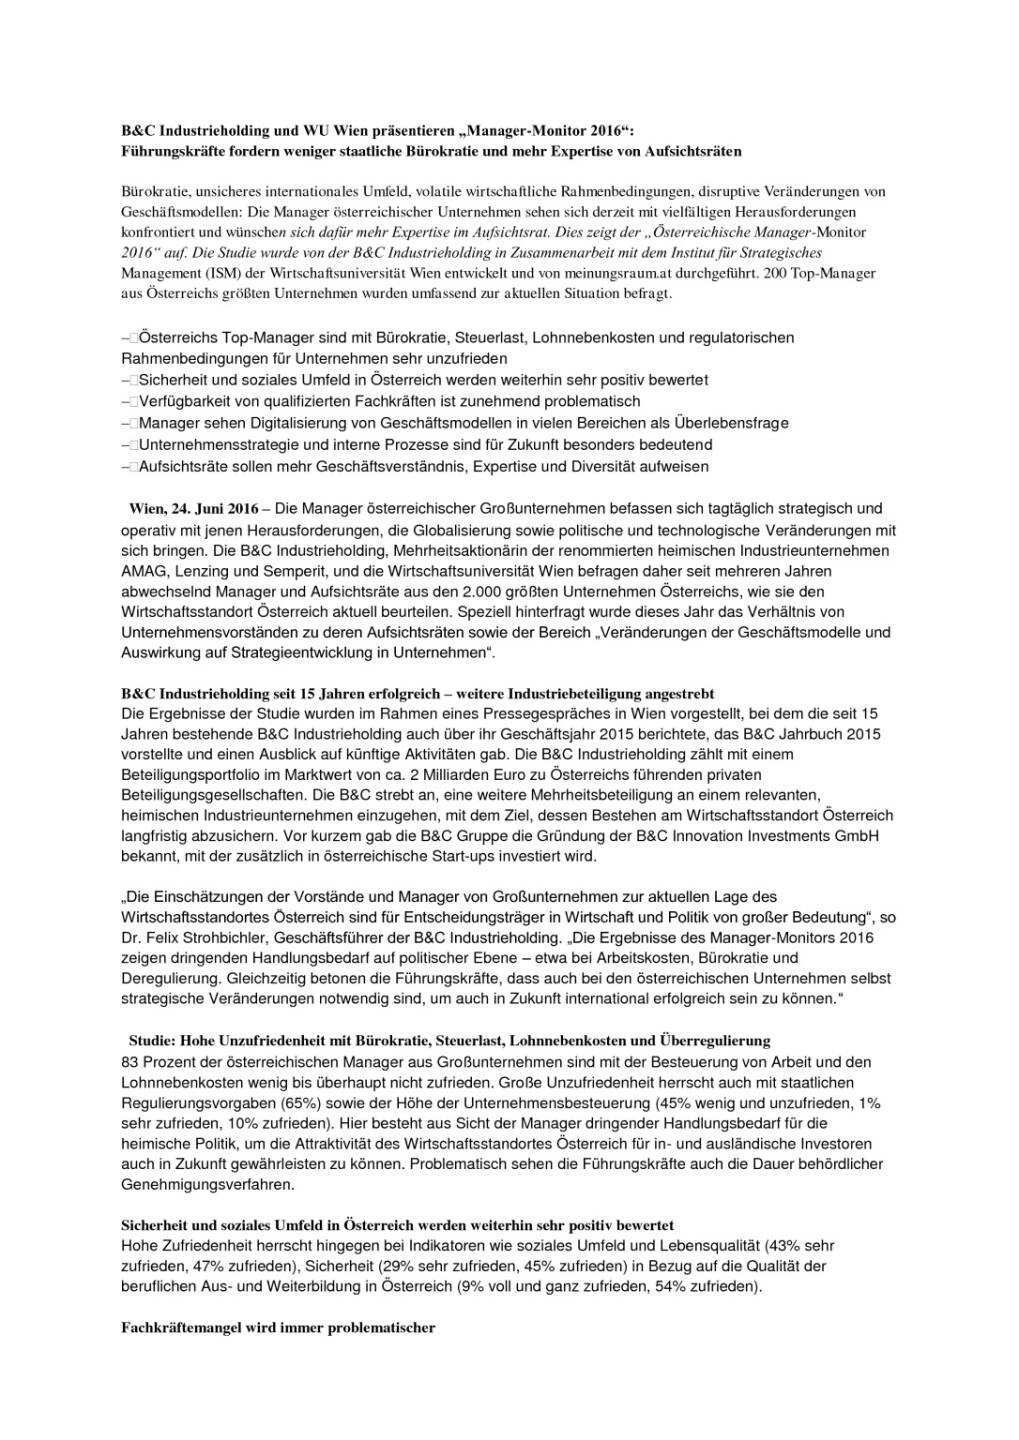 B&C Industrieholding und WU Wien präsentieren „Manager-Monitor 2016“, Seite 1/3, komplettes Dokument unter http://boerse-social.com/static/uploads/file_1274_bc_industrieholding_und_wu_wien_prasentieren_manager-monitor_2016.pdf